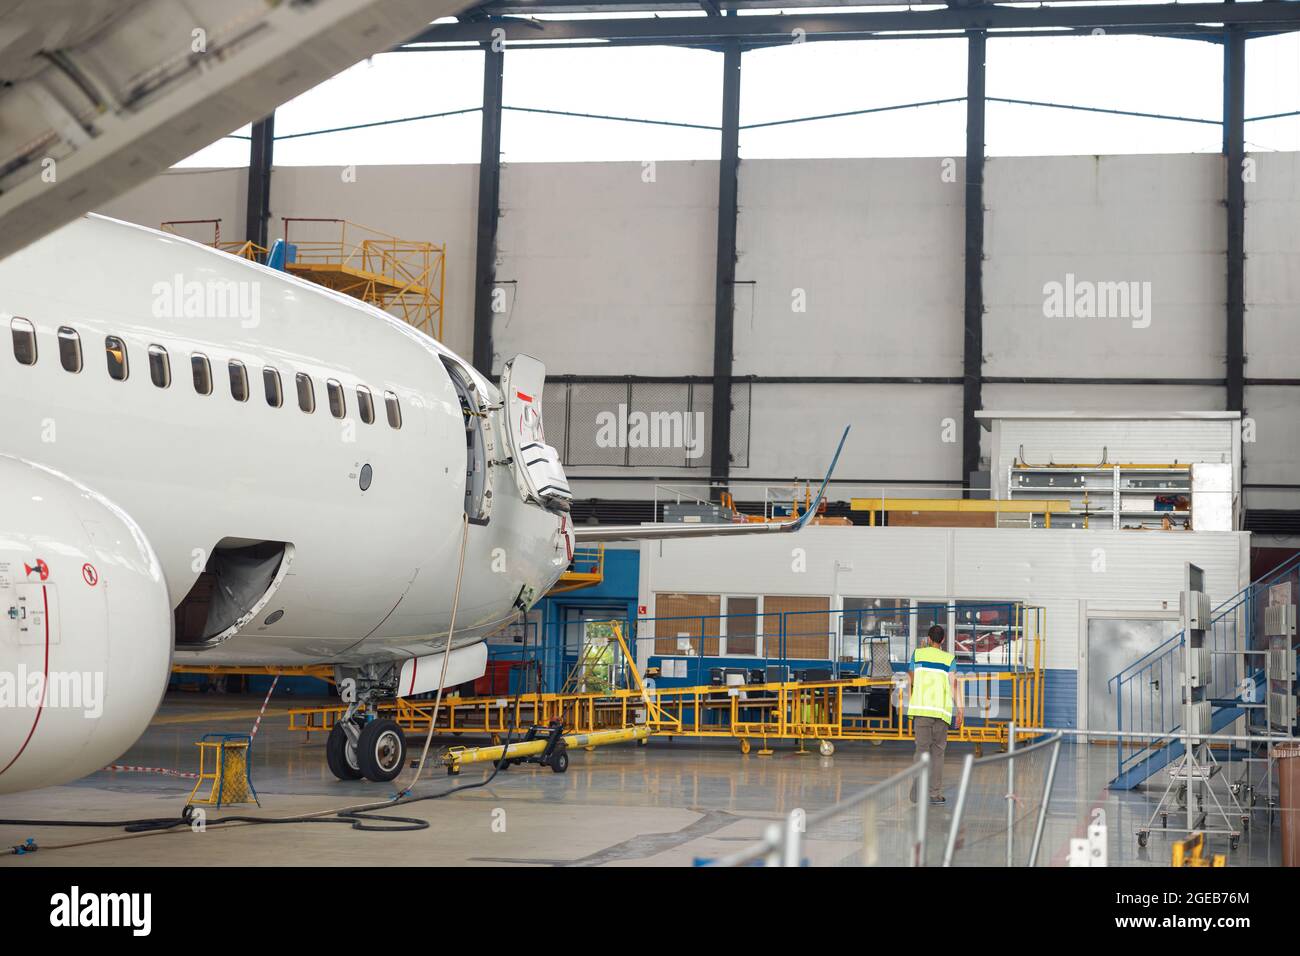 Aircraft. Passenger airplane under heavy maintenance in airport hangar indoors in the daytime Stock Photo